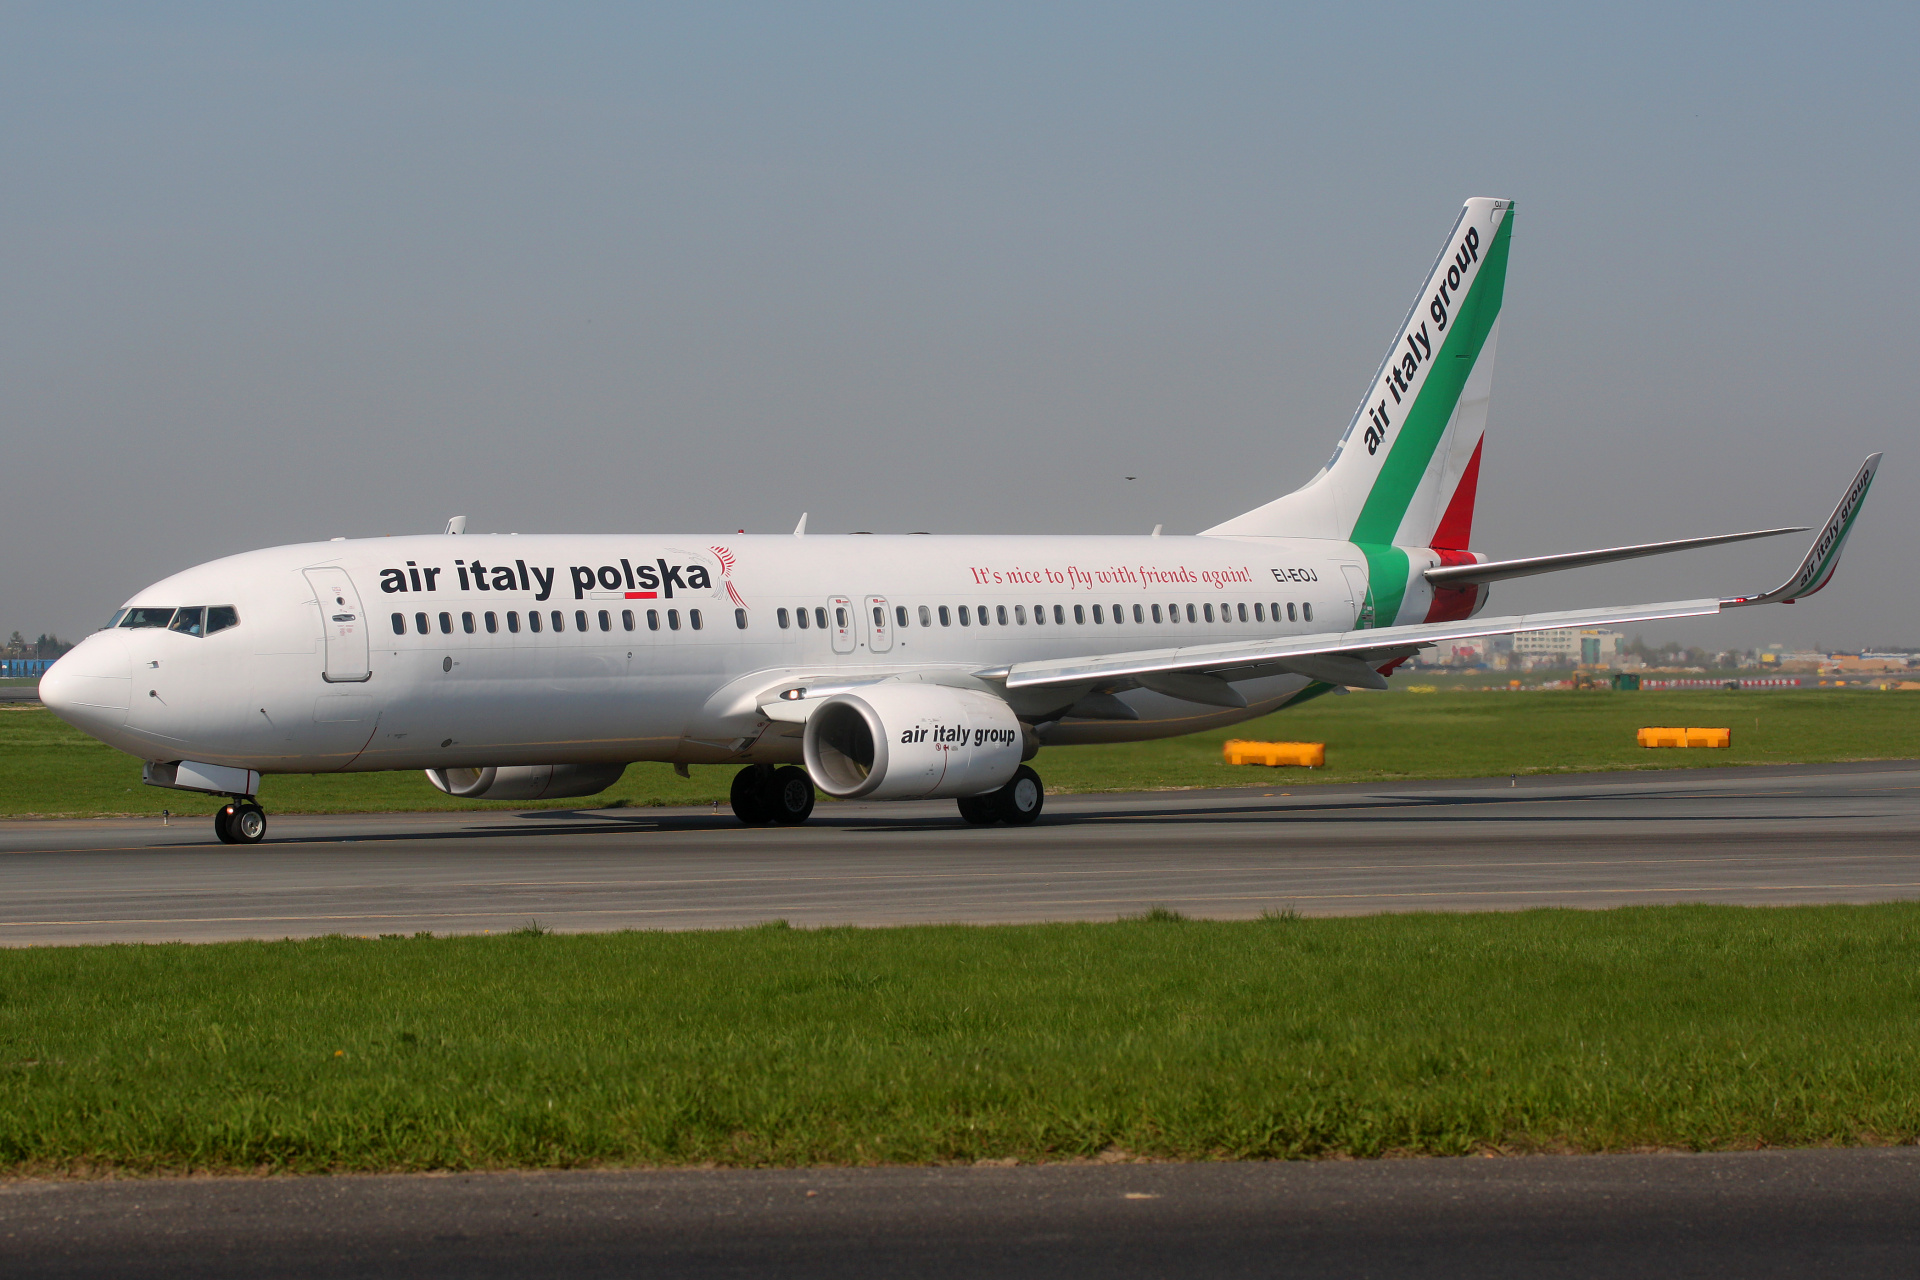 EI-EOJ, Air Italy Polska (Aircraft » EPWA Spotting » Boeing 737-800)